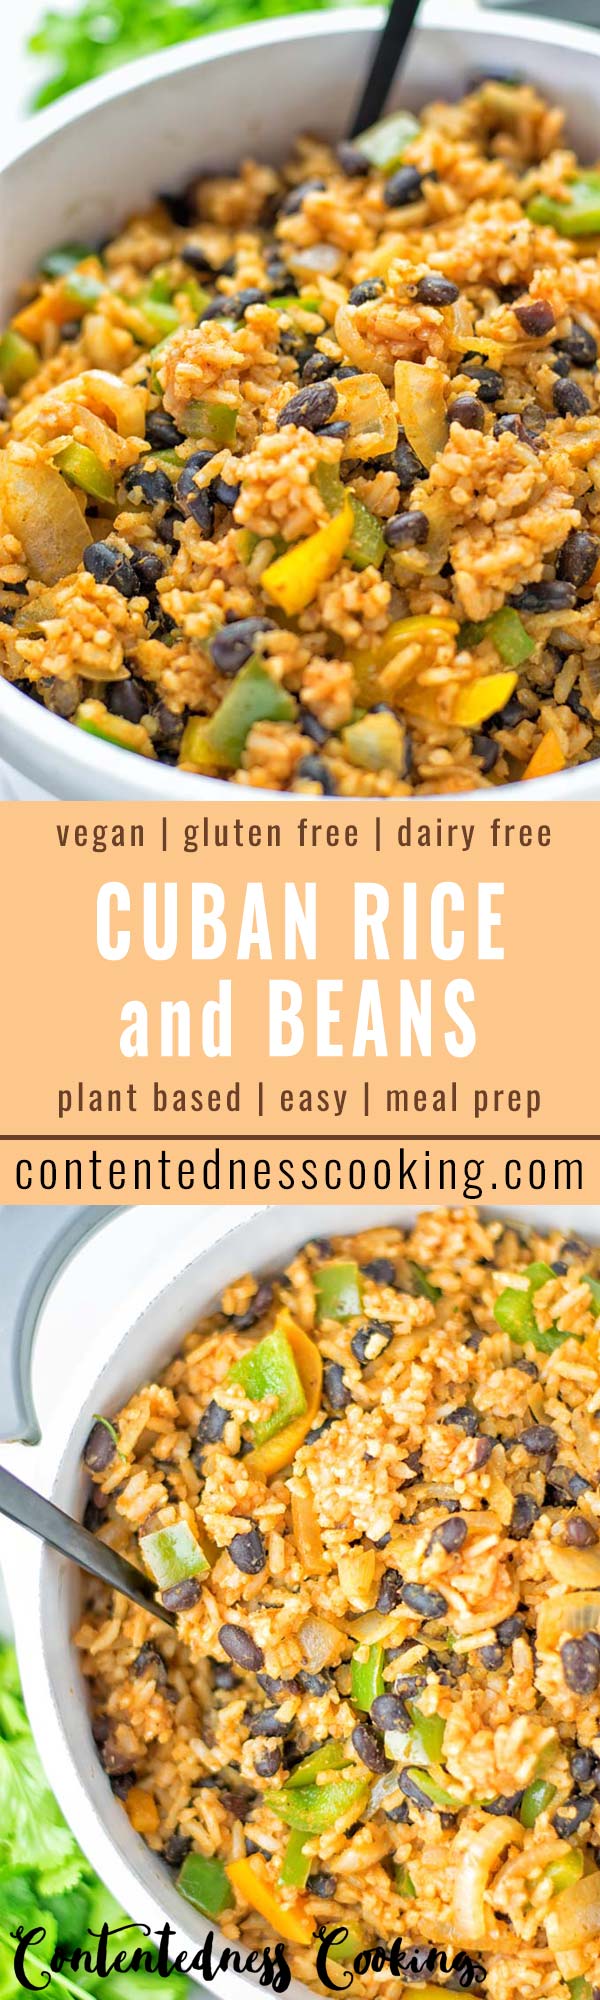 Cuban Rice and Beans | #vegan #glutenfree #contentednesscooking #plantbased #dairyfree 